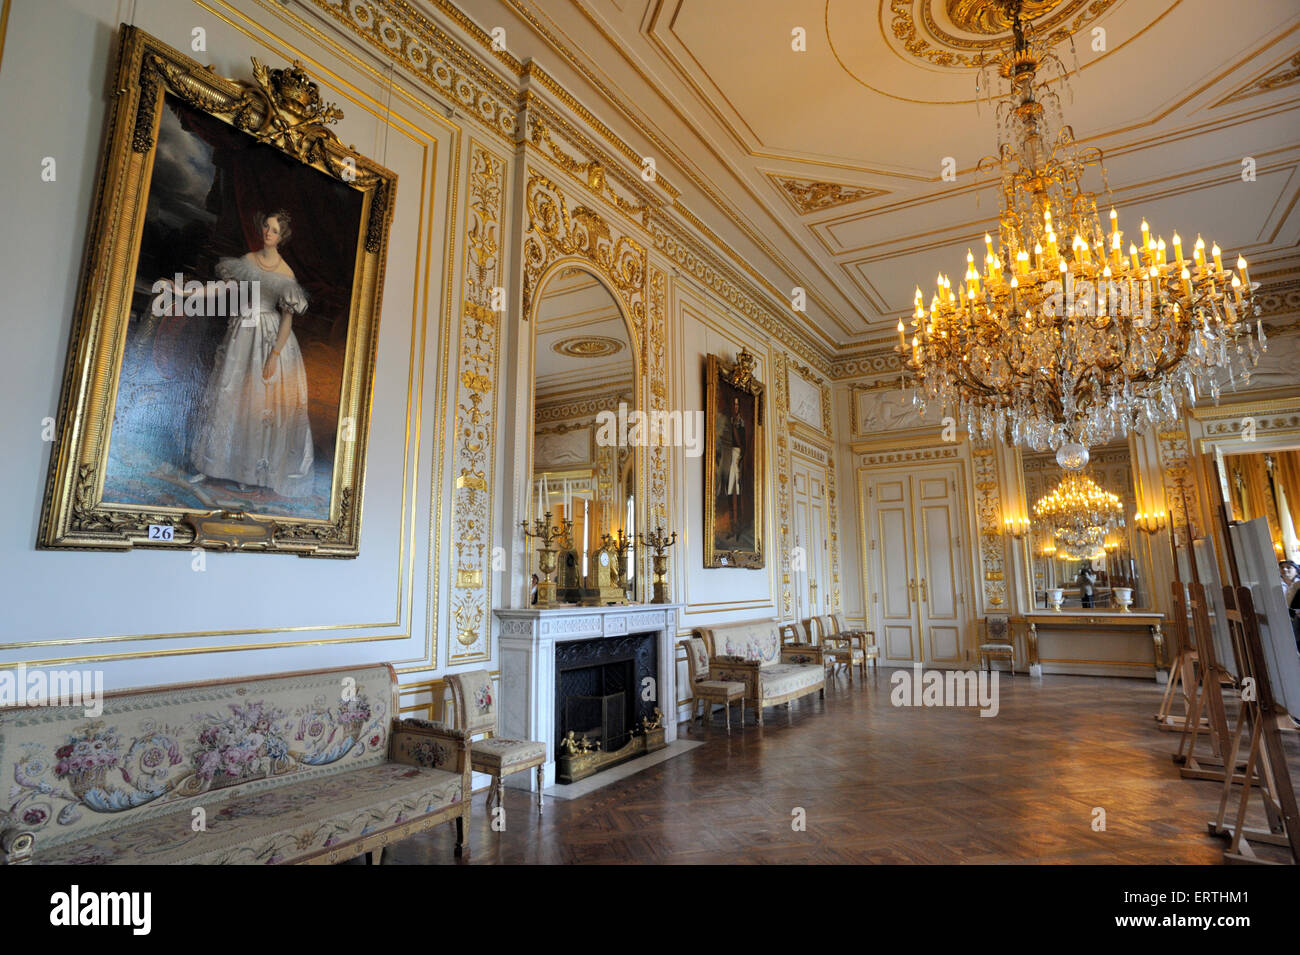 belgium, brussels, royal palace interior Stock Photo